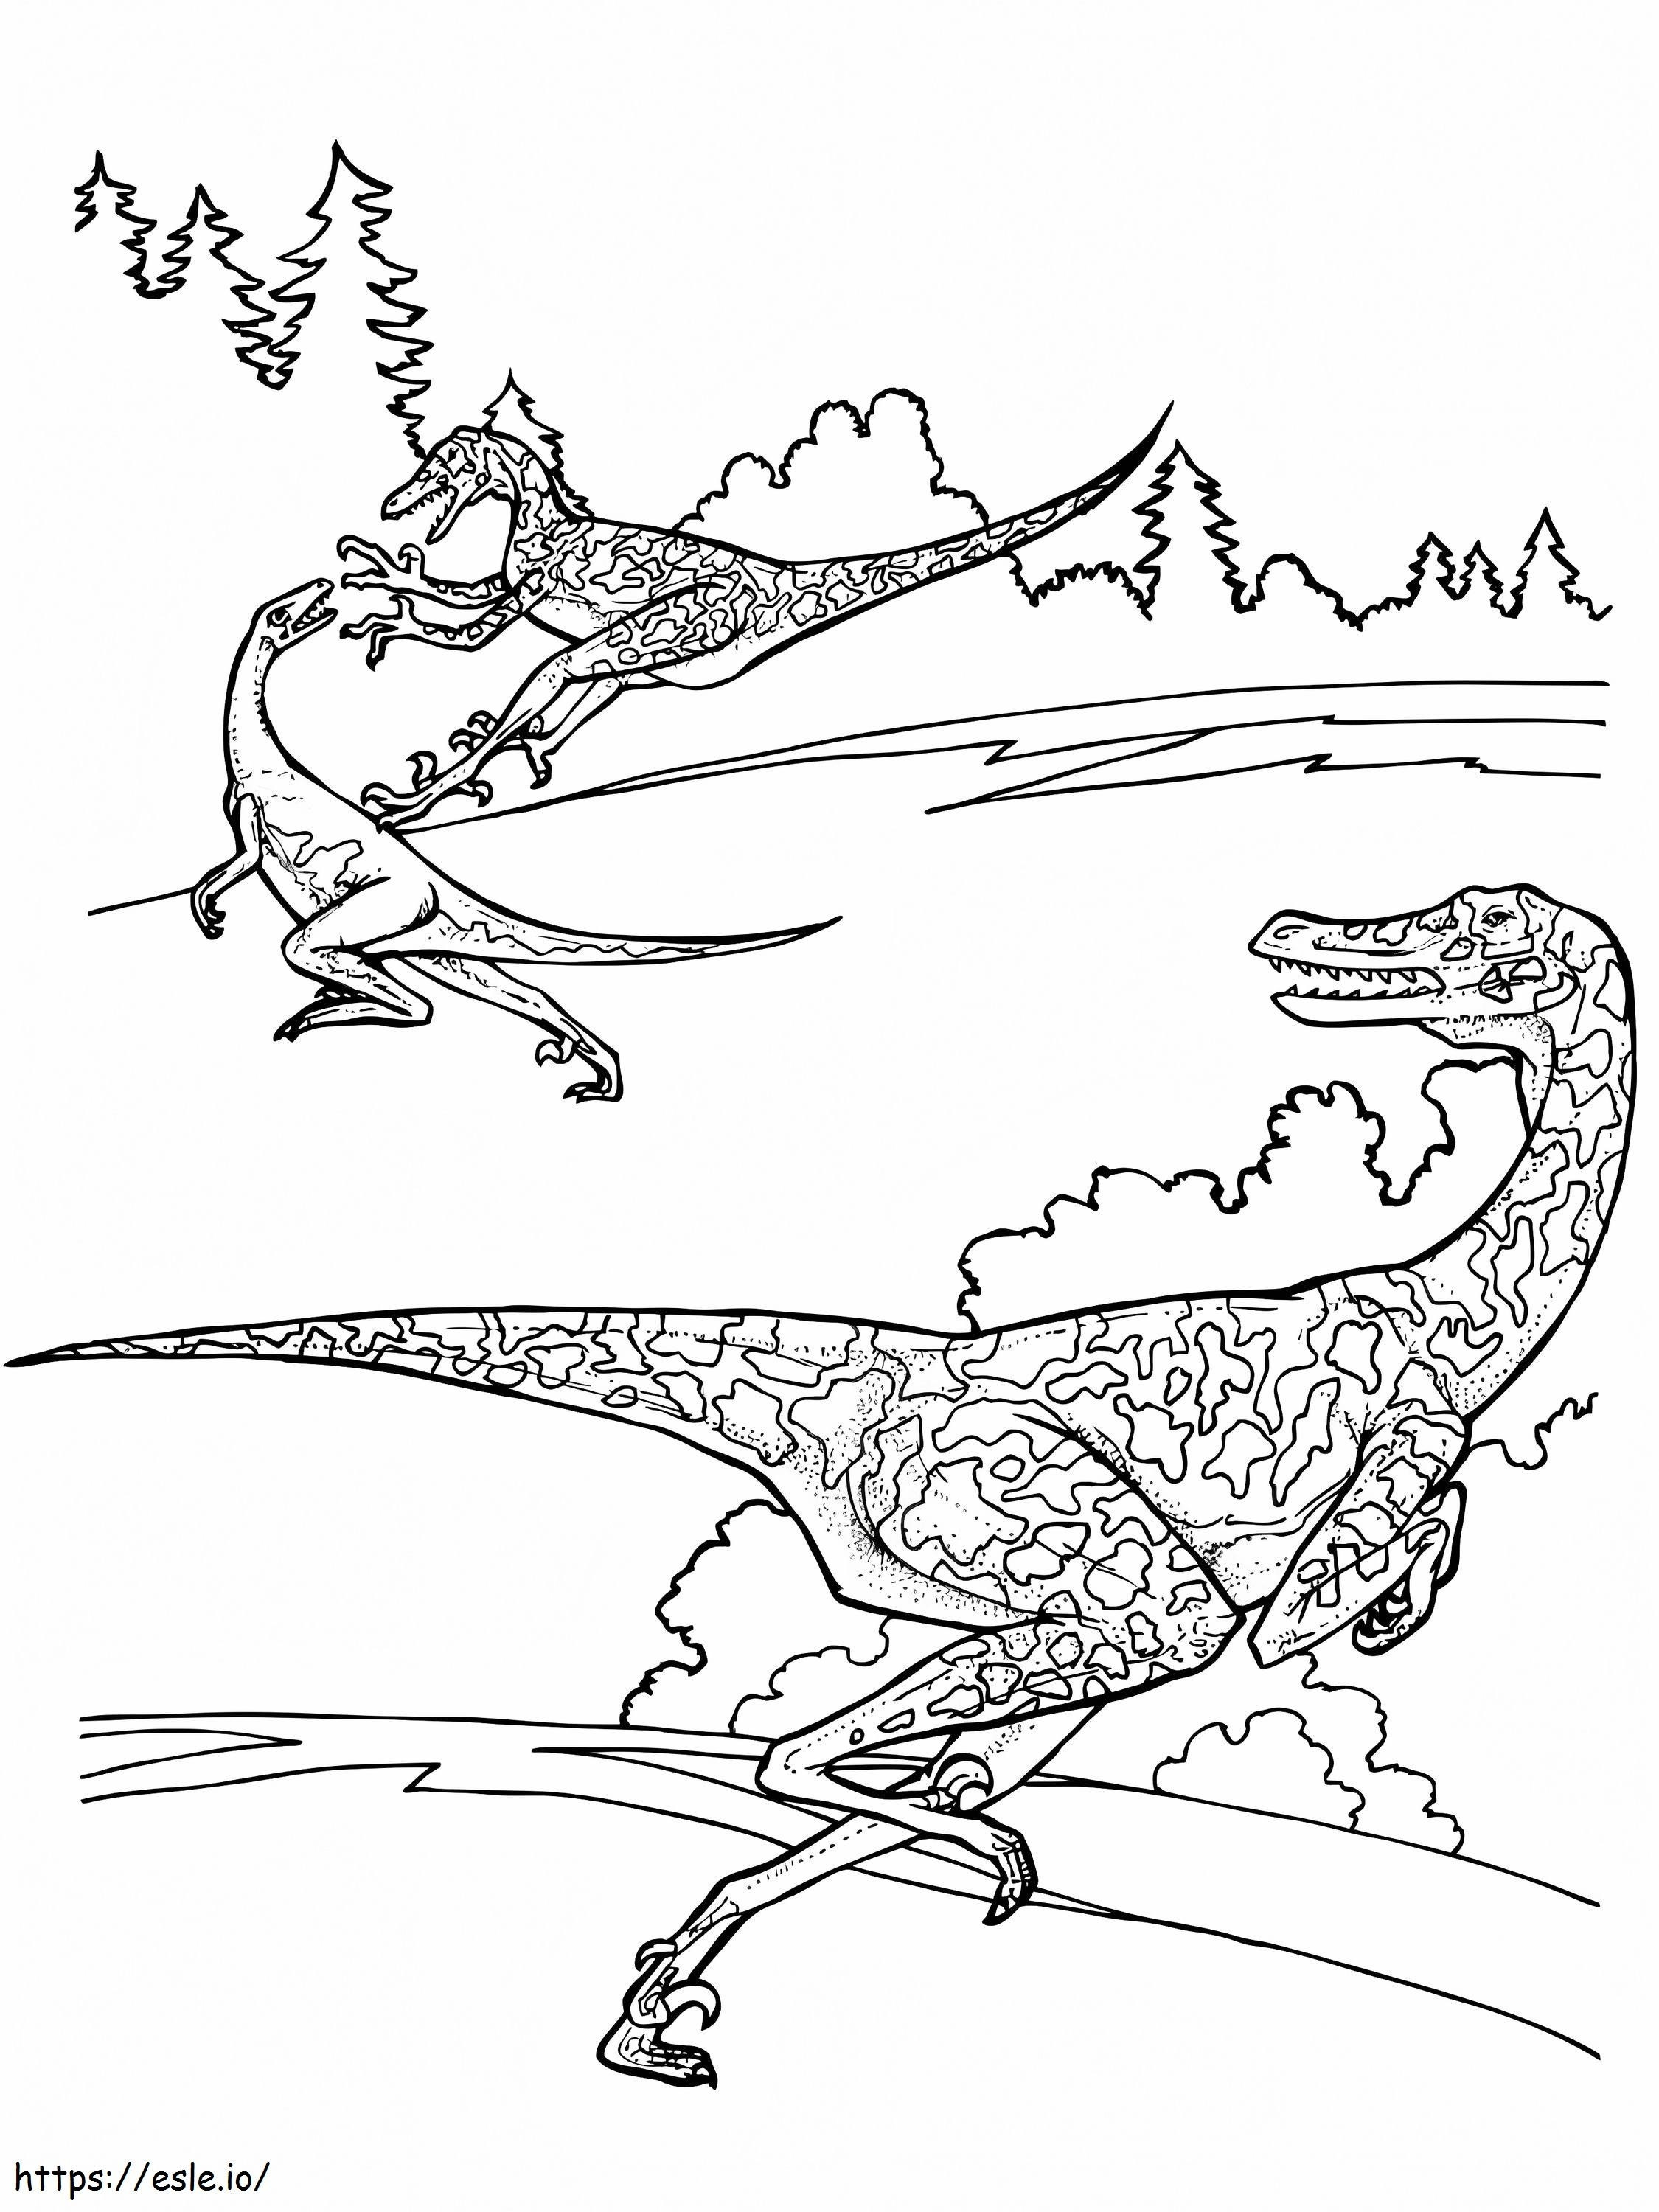 Coloriage Dinosaure Vélociraptor 768X1024 à imprimer dessin